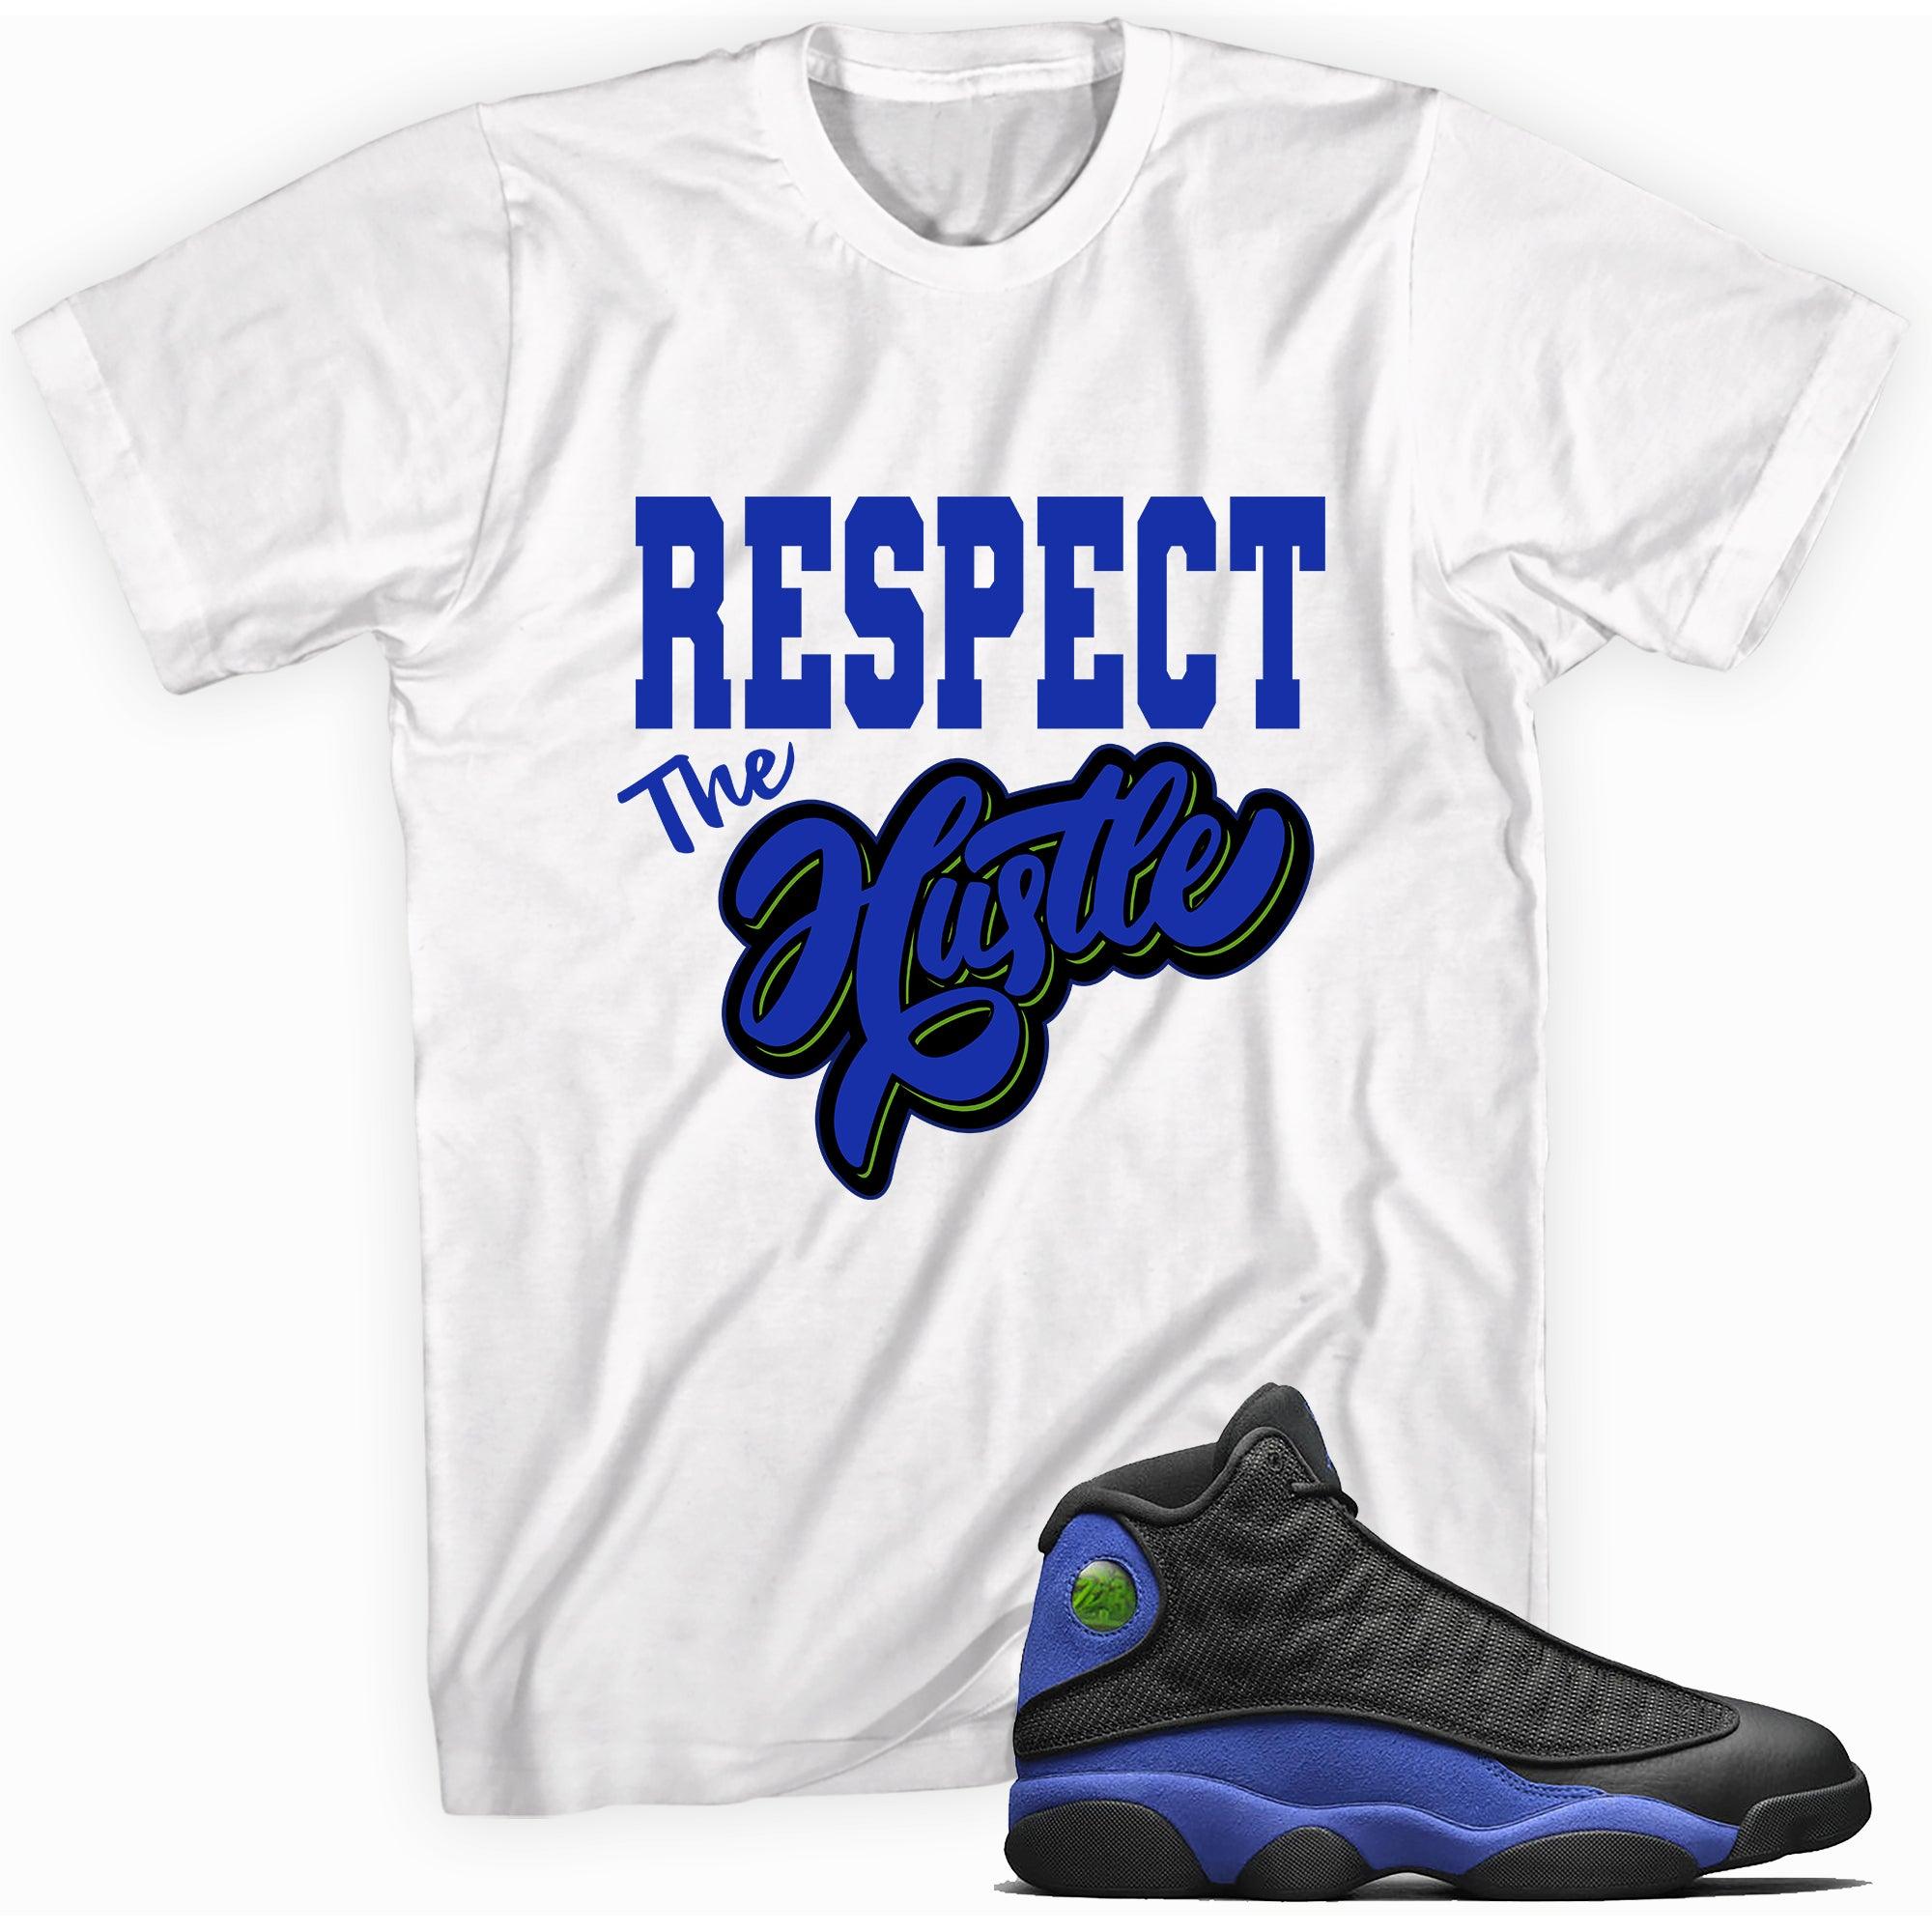 Respect The Hustle Shirt AJ 13s Hyper Royal photo